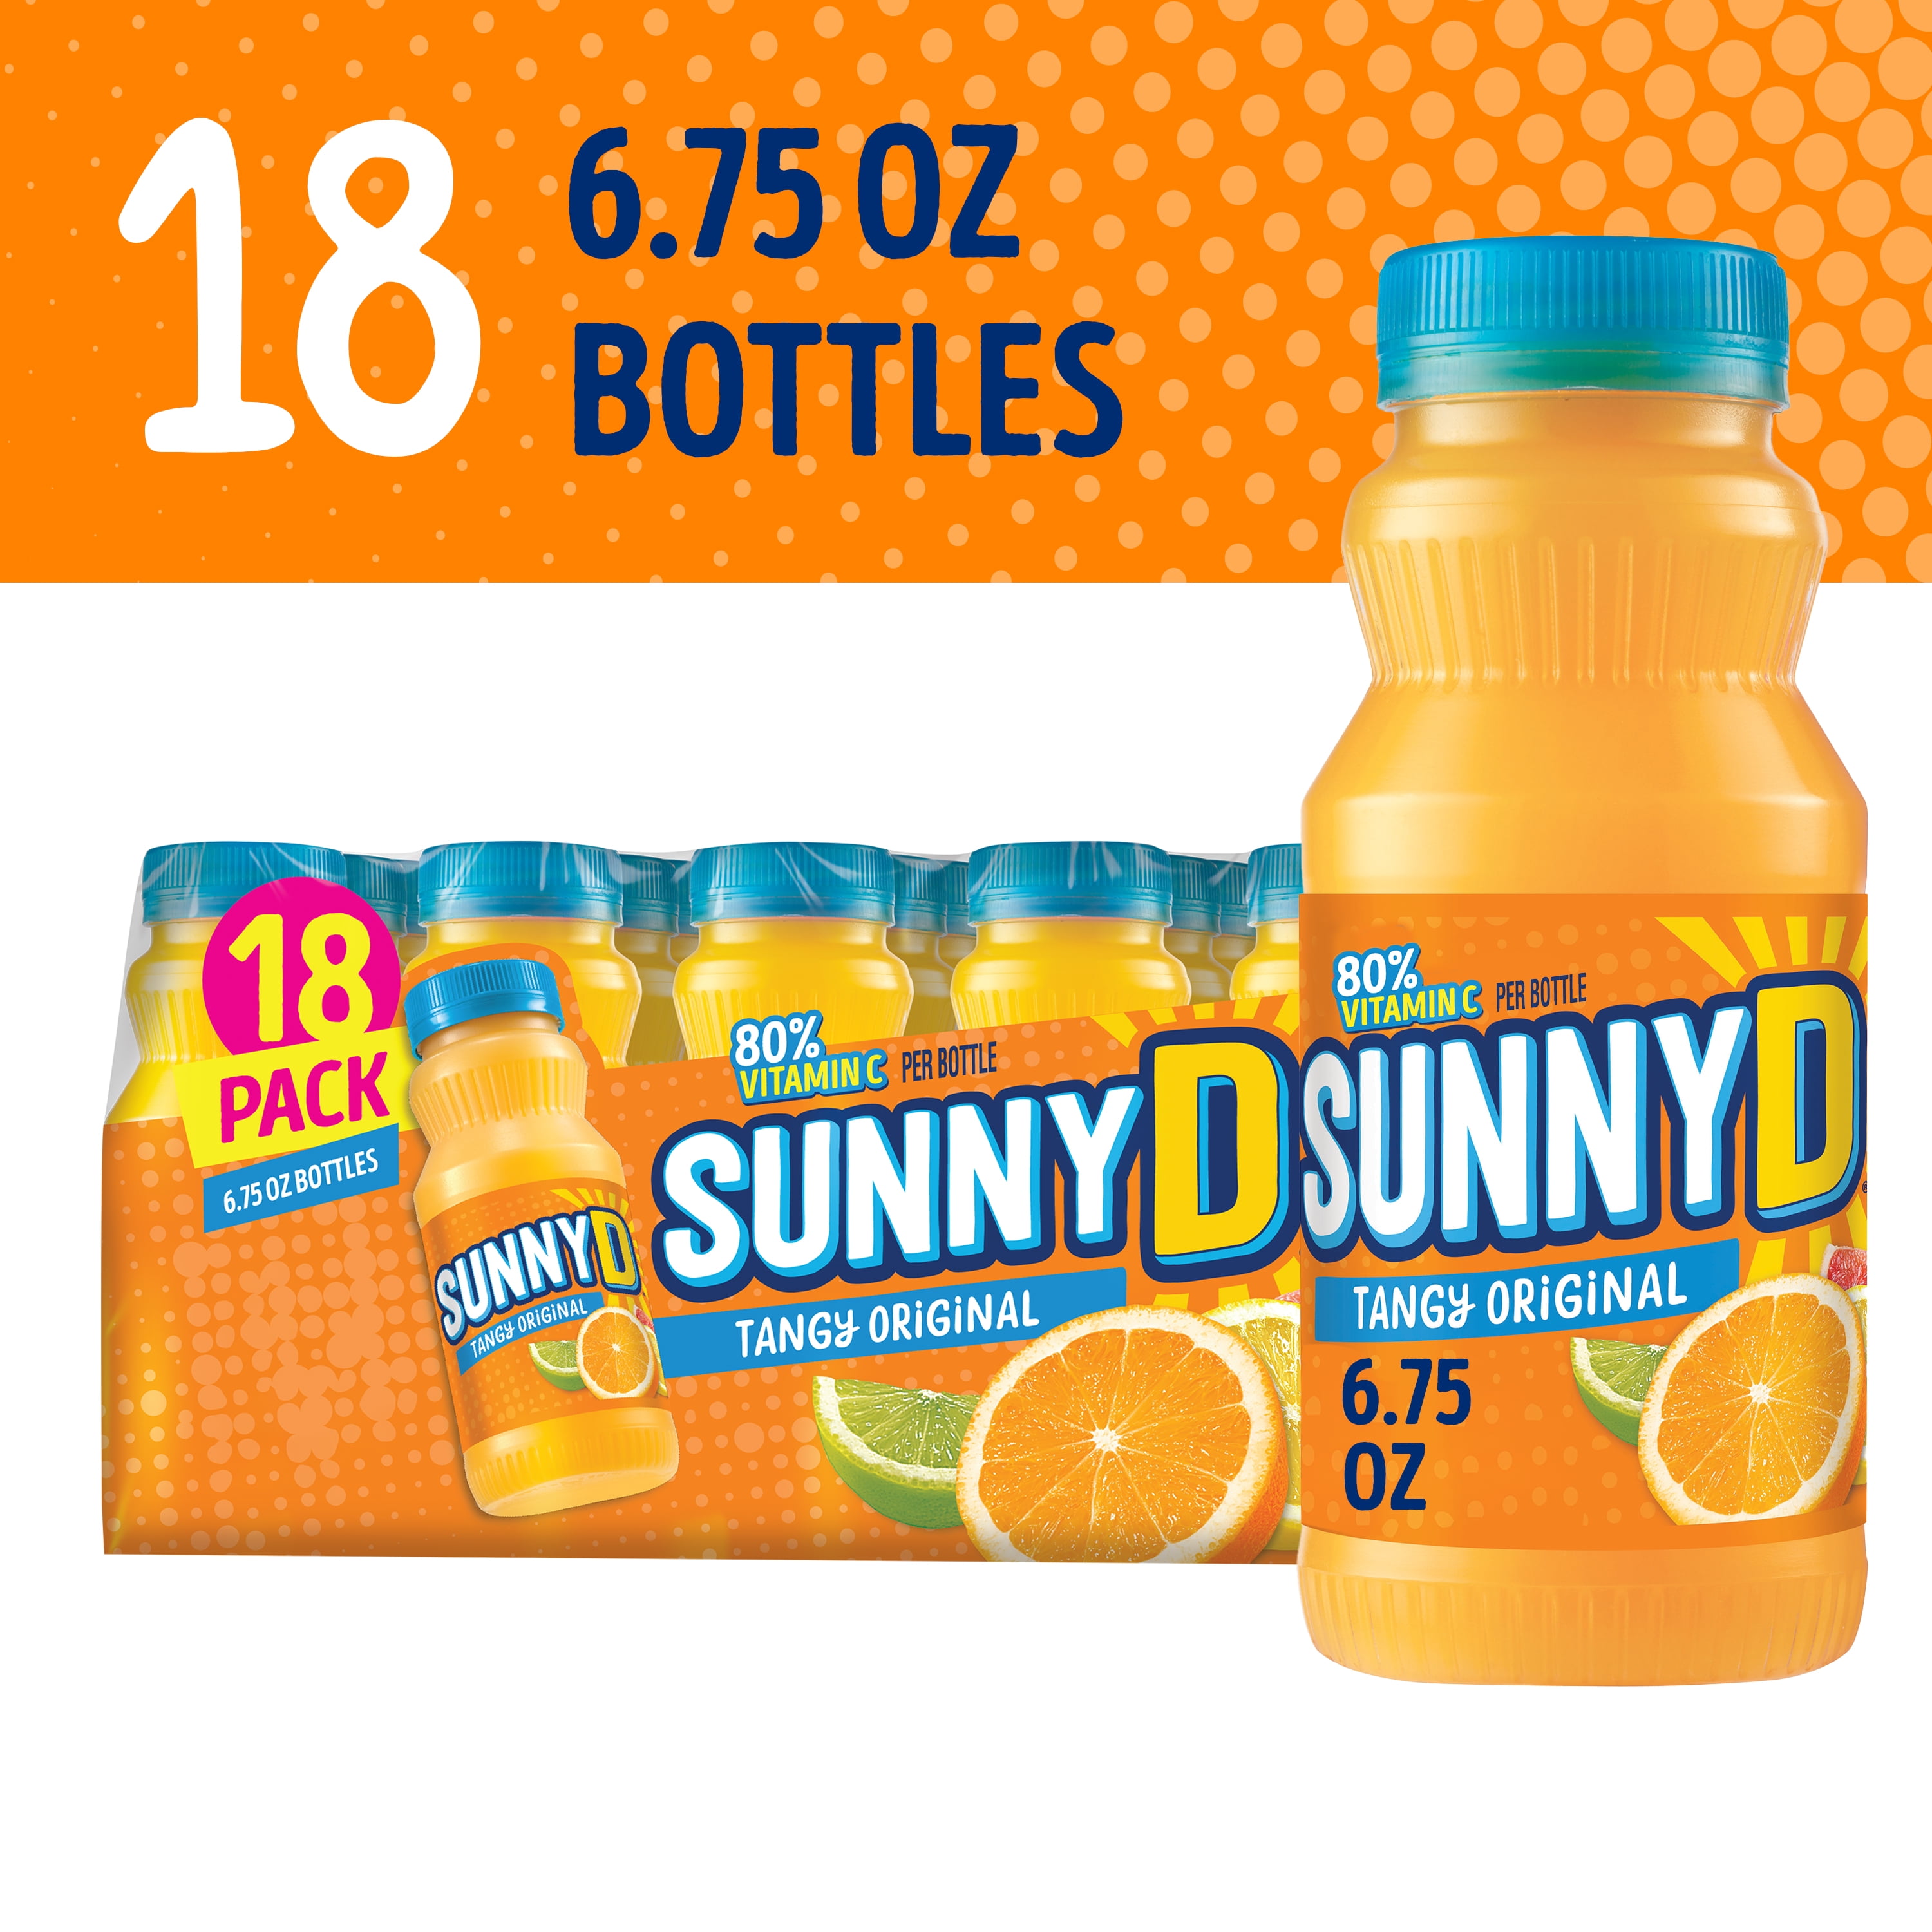 SUNNYD Tangy Original Shelf Stable Orange Juice Drinks, 18 Count, 6.75 FL OZ Bottles